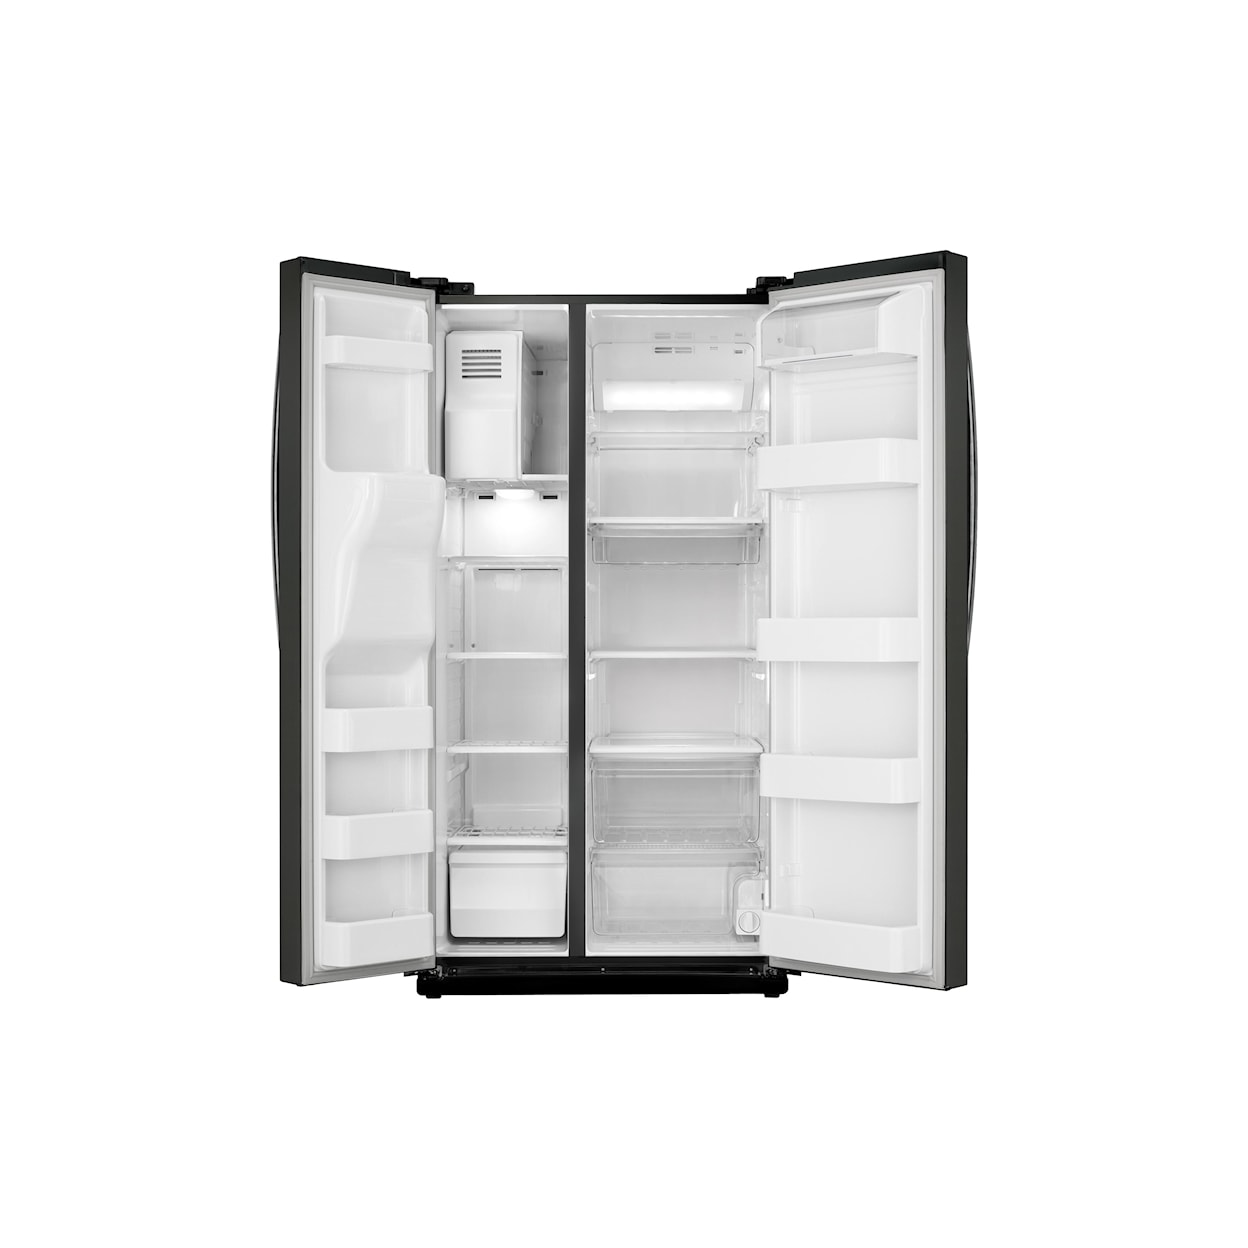 Samsung Appliances Side-By-Side Refrigerators 24.5 cu. ft. Side-by-Side Refrigerator